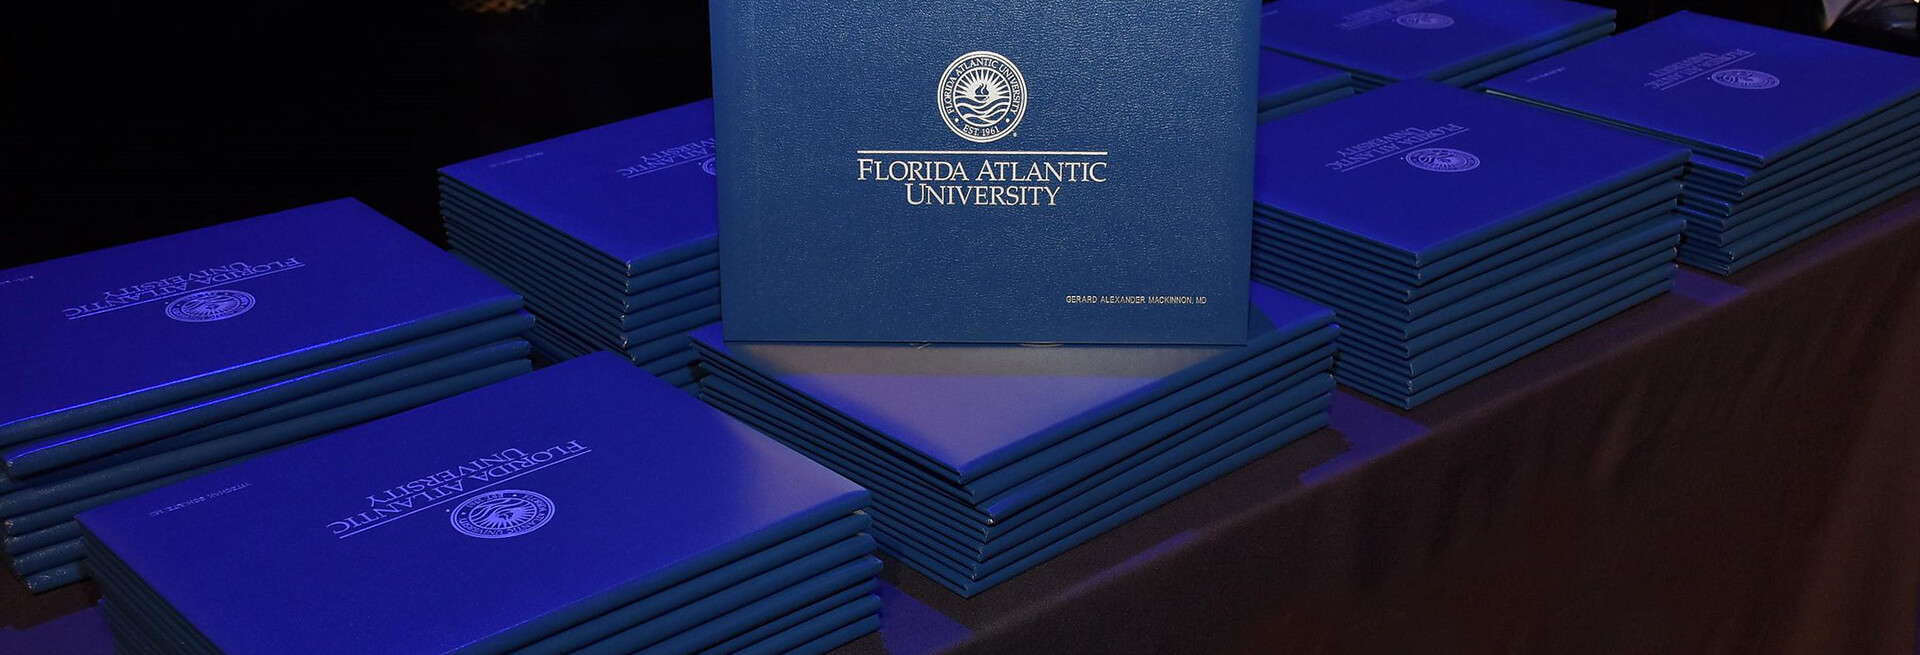 Florida Atlantic University Diplomas